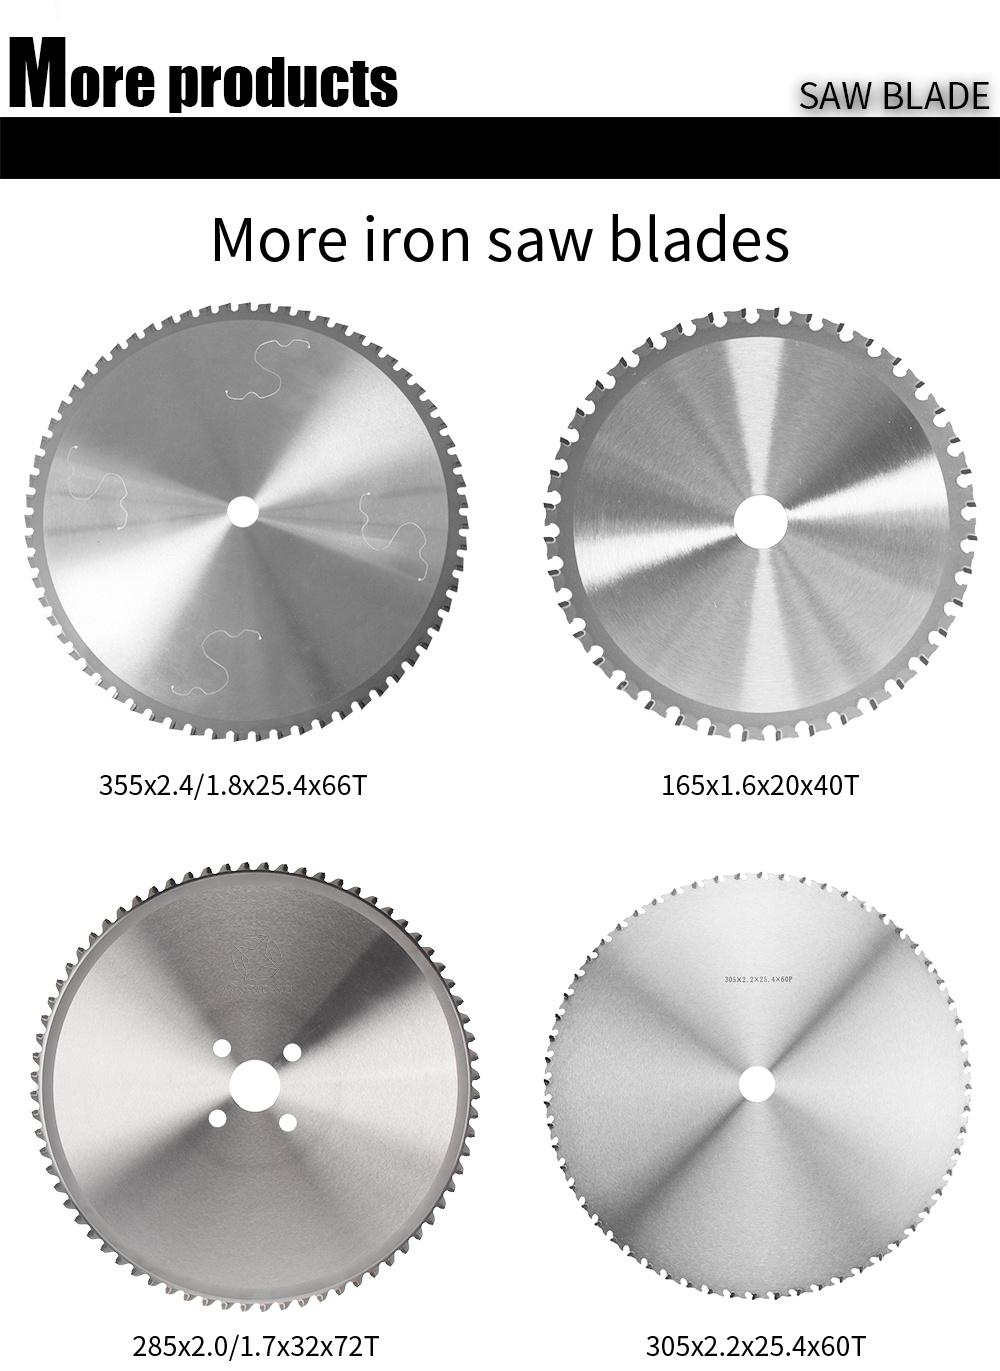 165mm Tct Metal Cutting Circular Saw Blade for Cut Iron